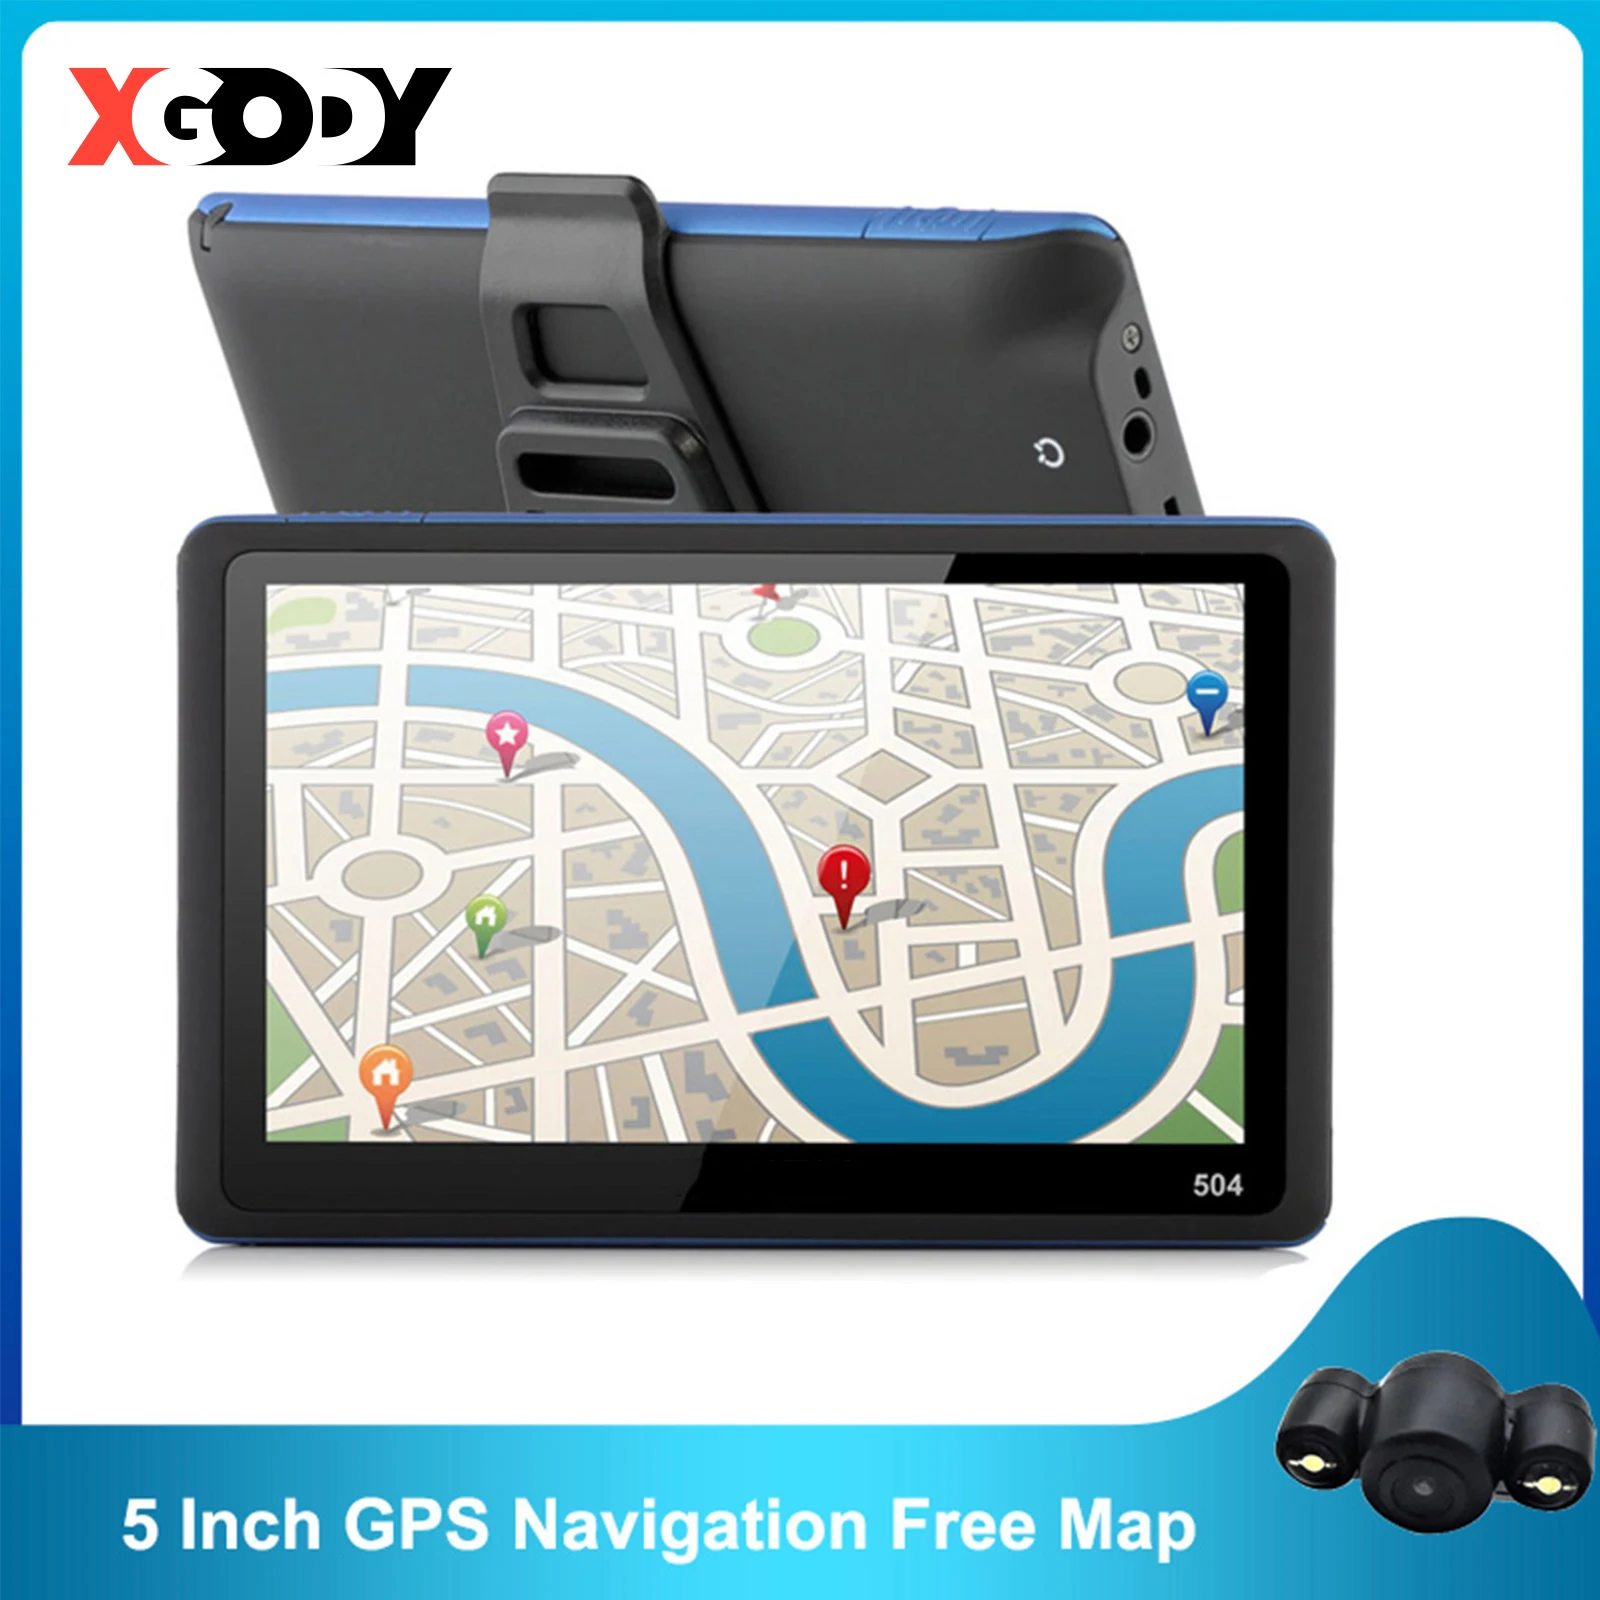 

XGODY 504 5" Car GPS Navigator 5 Inch Vehicle Truck GPS Navigation 128MB+8GB Touch Screen Auto Sat Nav Russia Navitel Europe Map